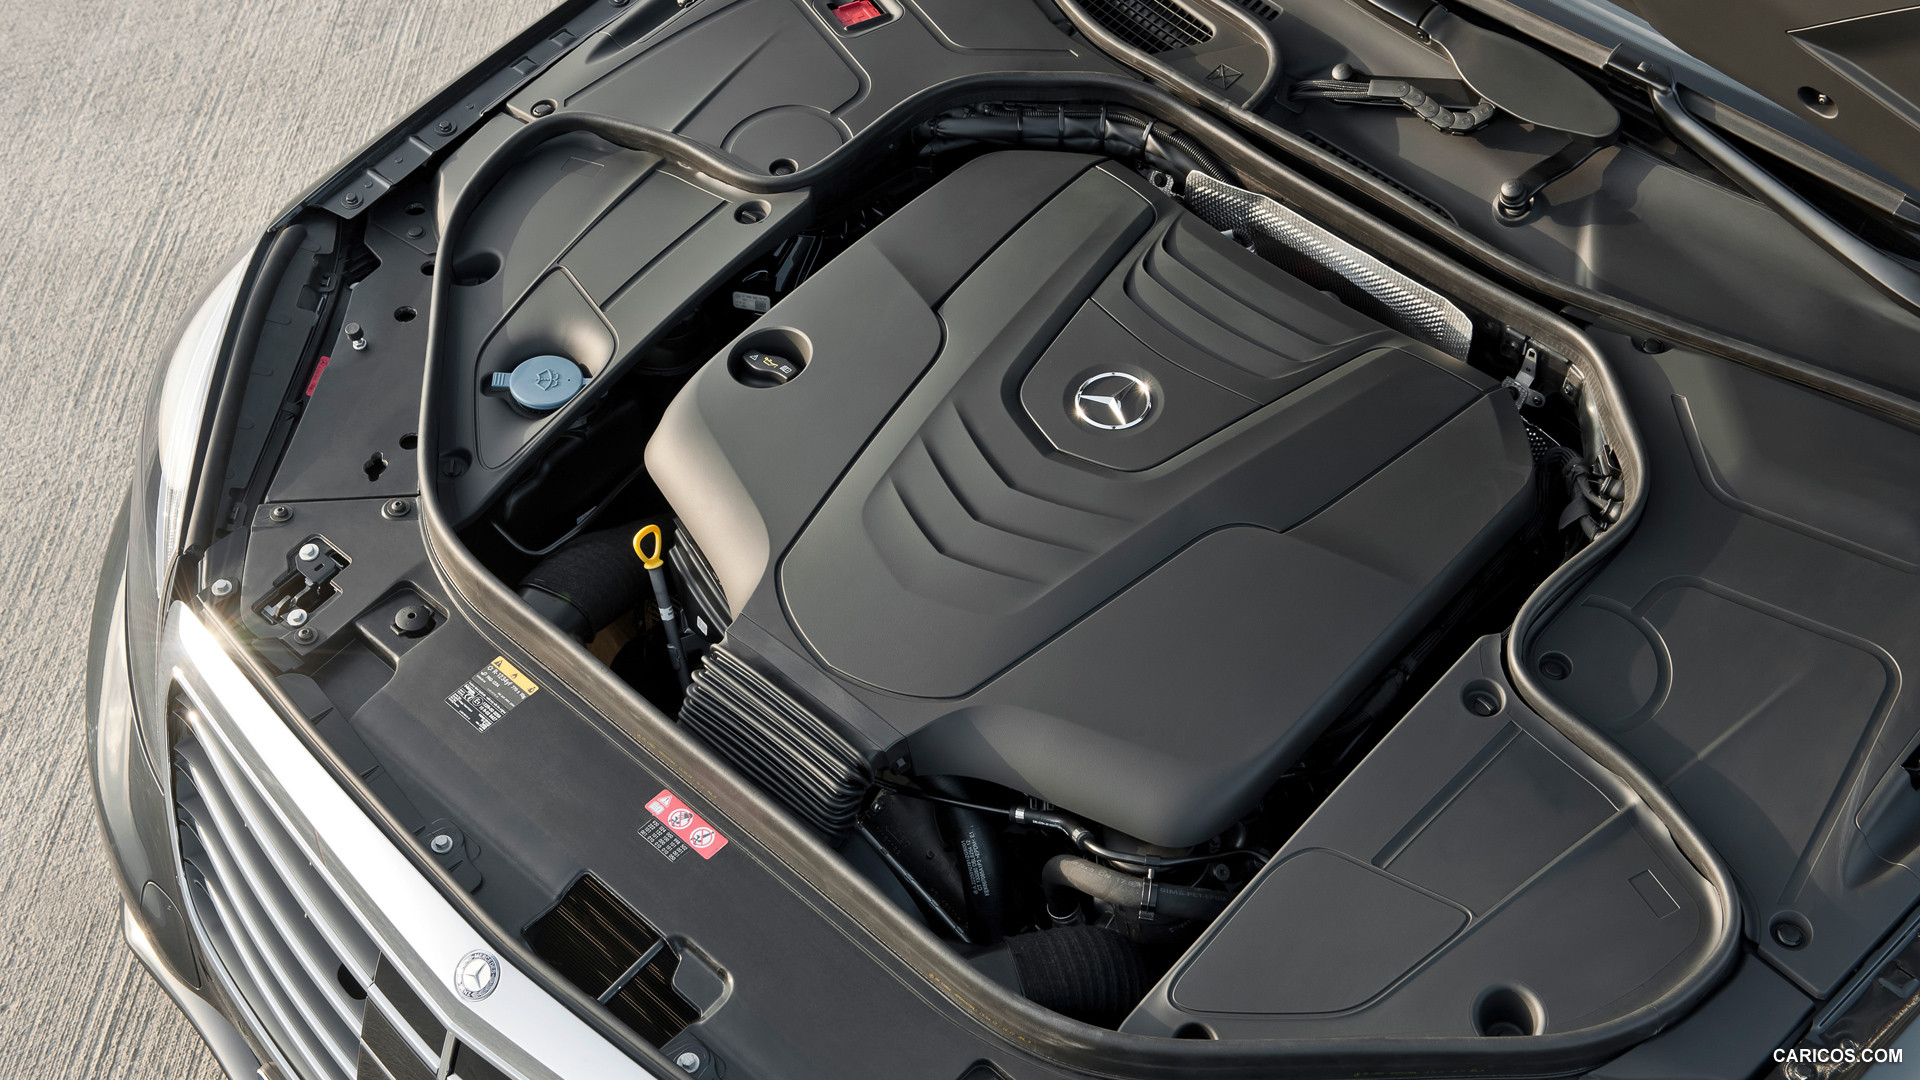 2014 Mercedes-Benz S-Class S350 BlueTEC, V6 Diesel - Engine, #52 of 138